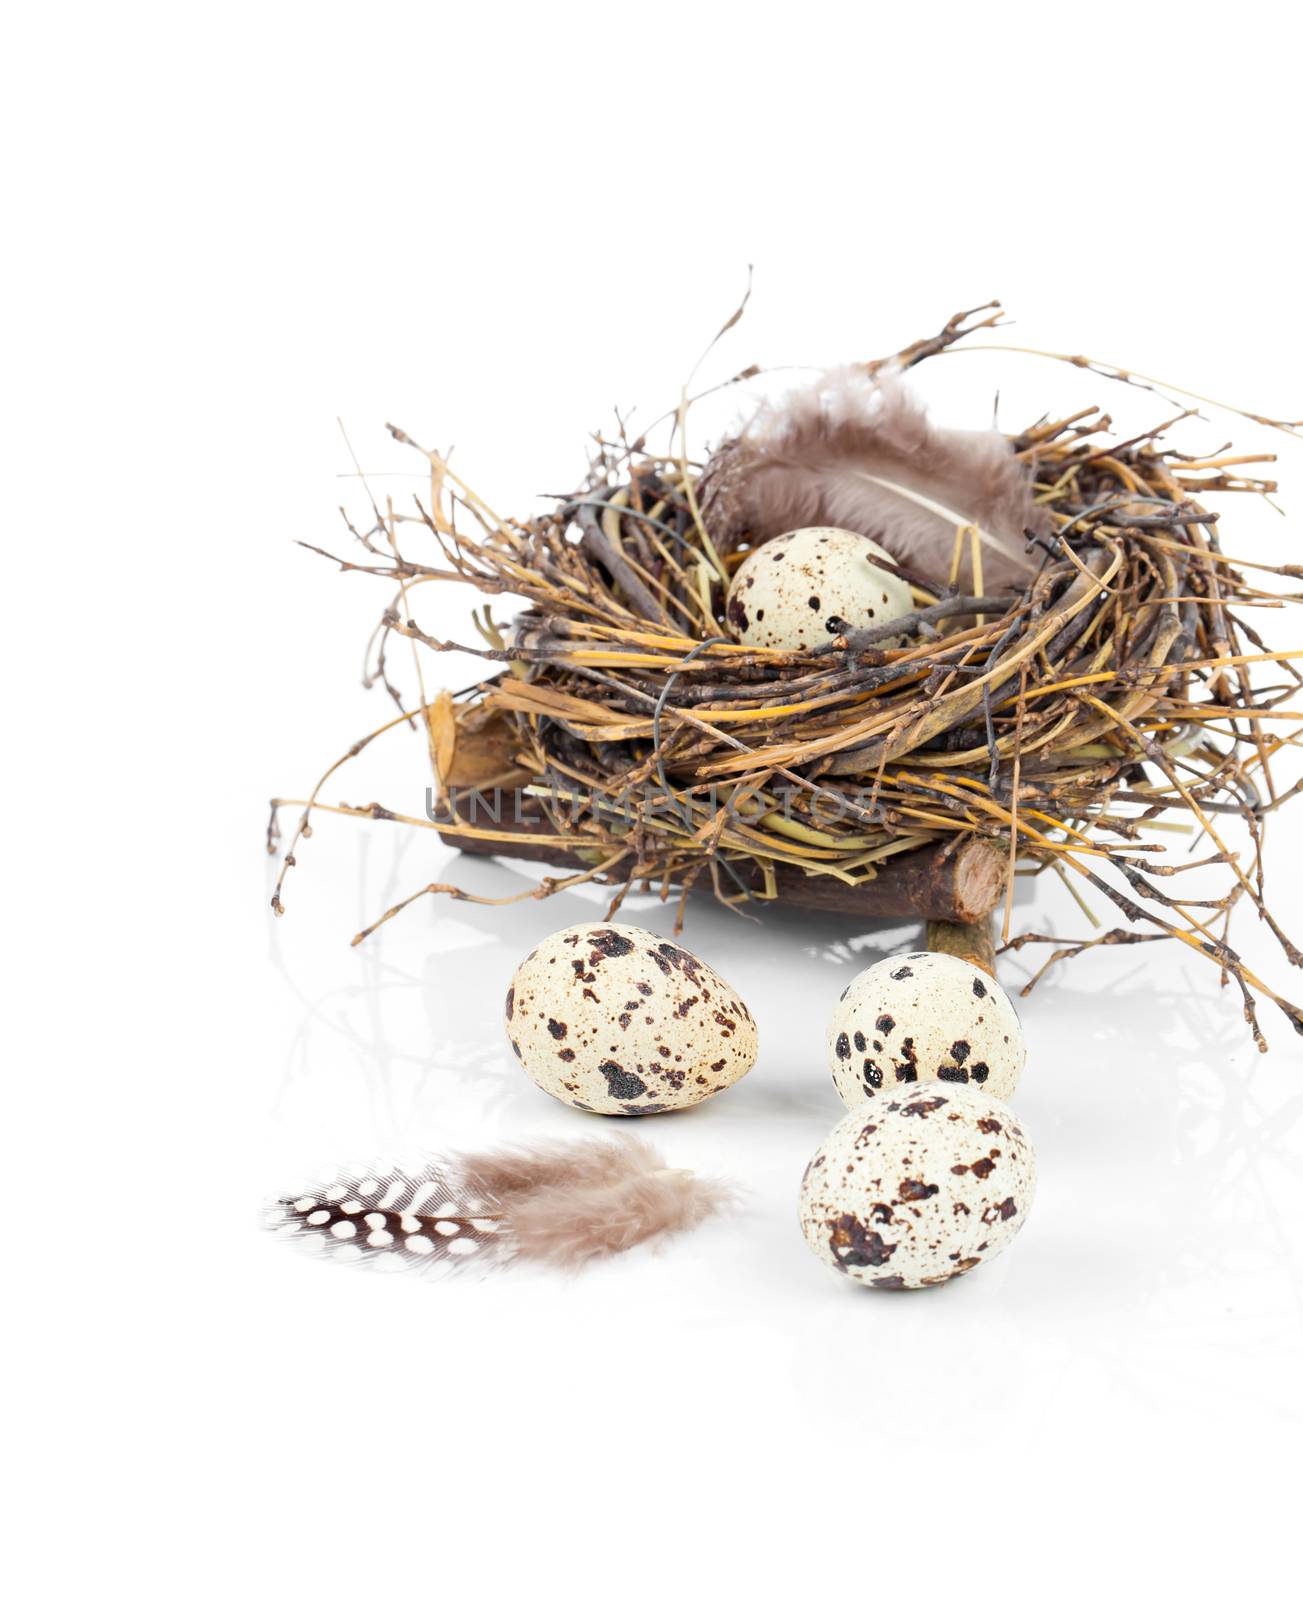 quail eggs on white background by motorolka